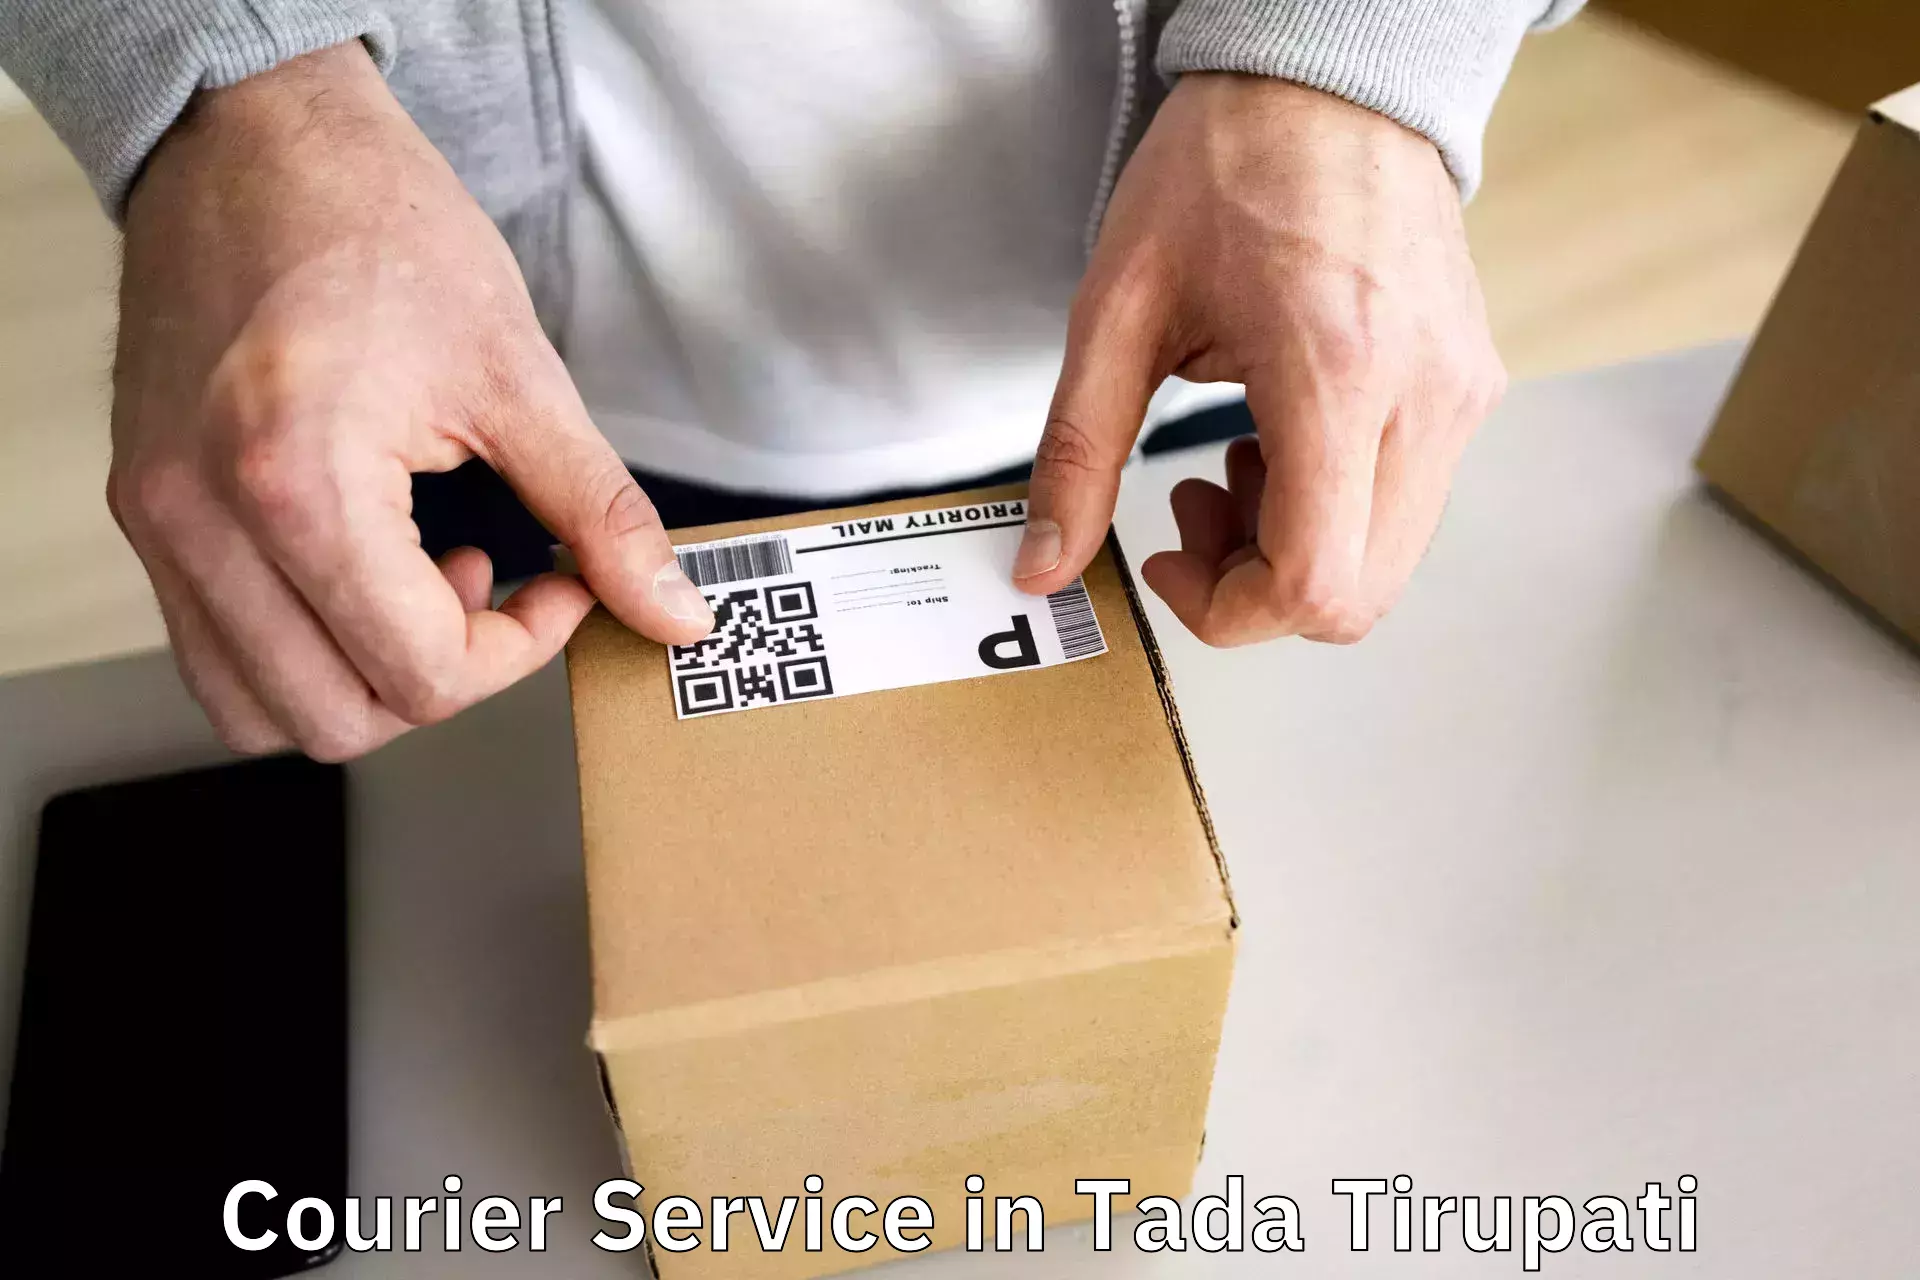 Modern delivery technologies in Tada Tirupati